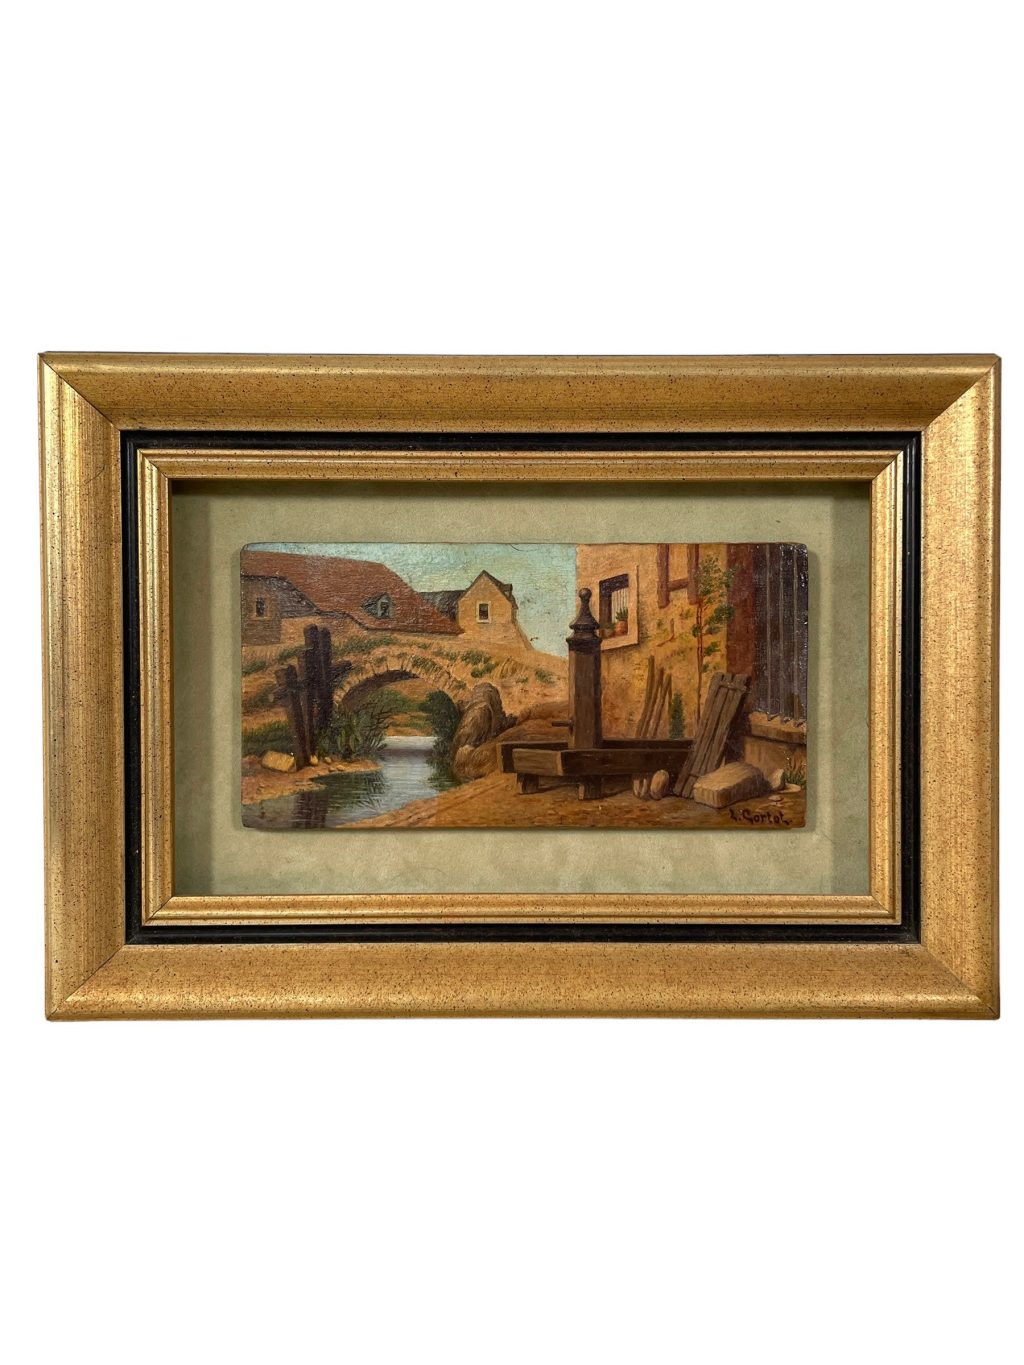 Vintage Oil Painting On Wood Signed L. Gortot Reframed River Bridge House Village circa 1960-70’s